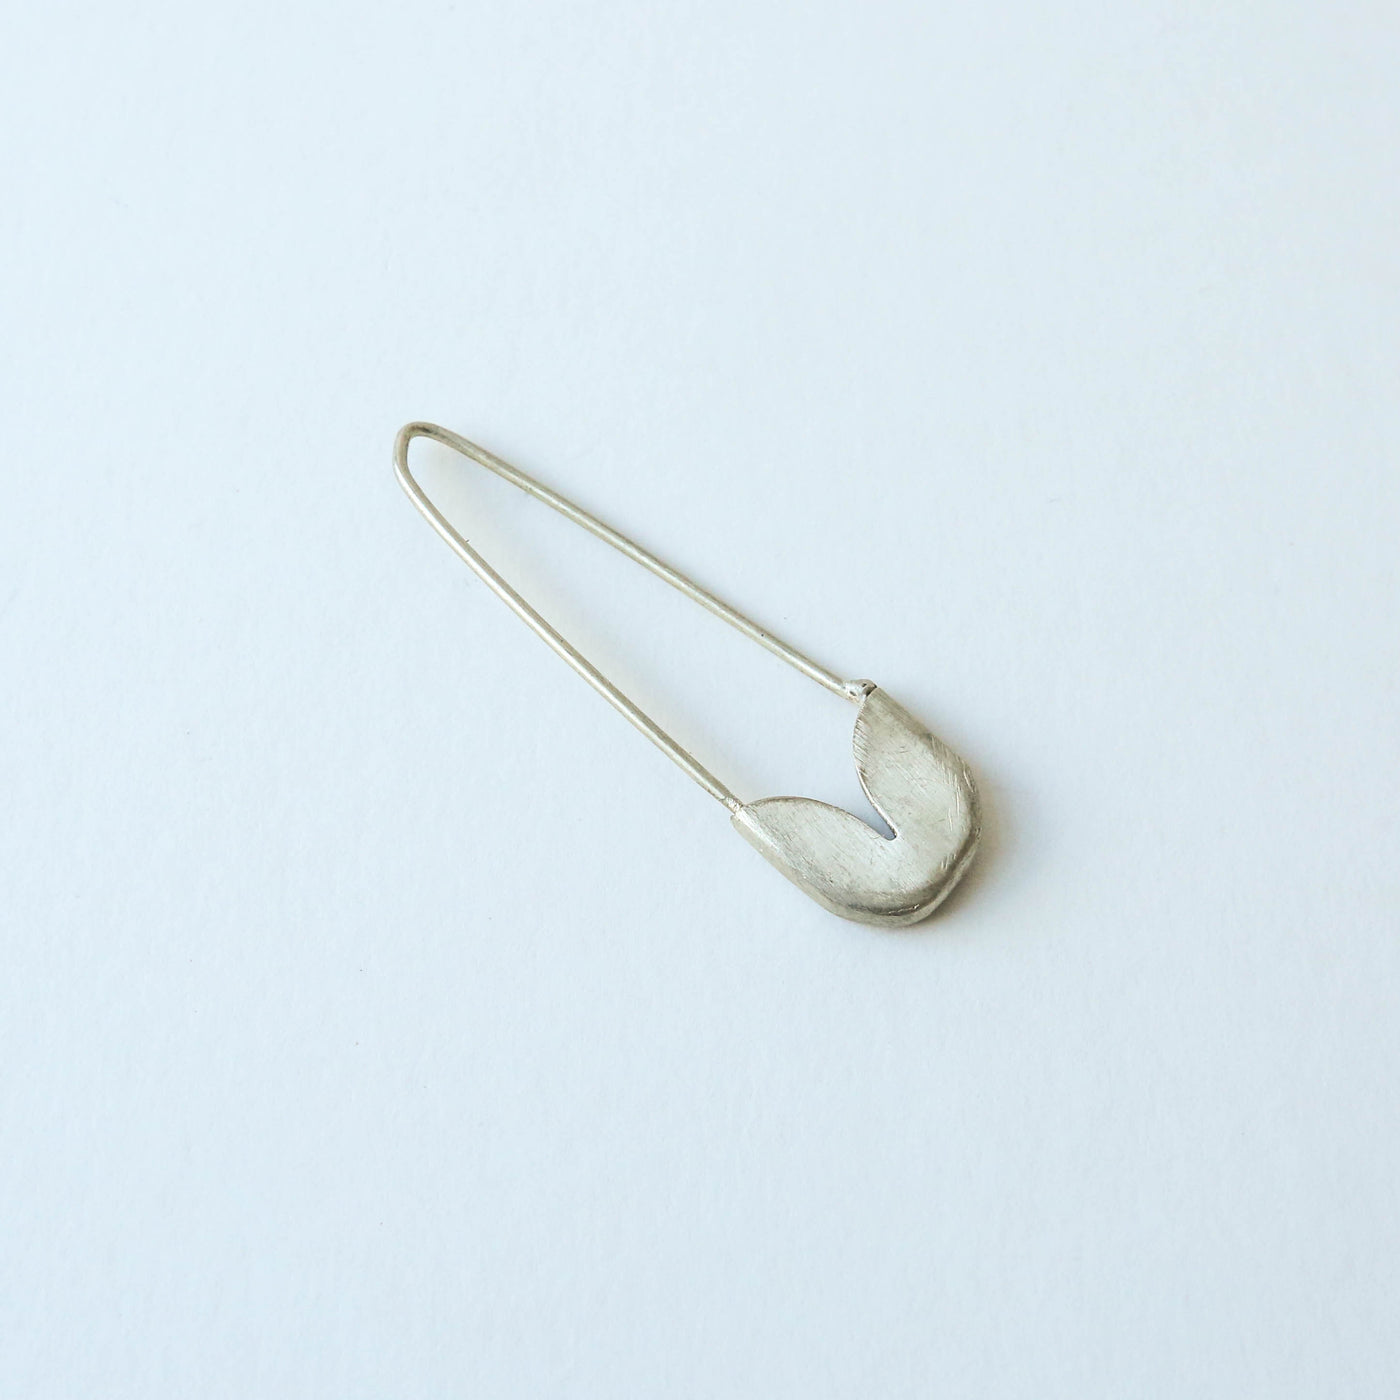 7.5cm Silver Scarf Pin